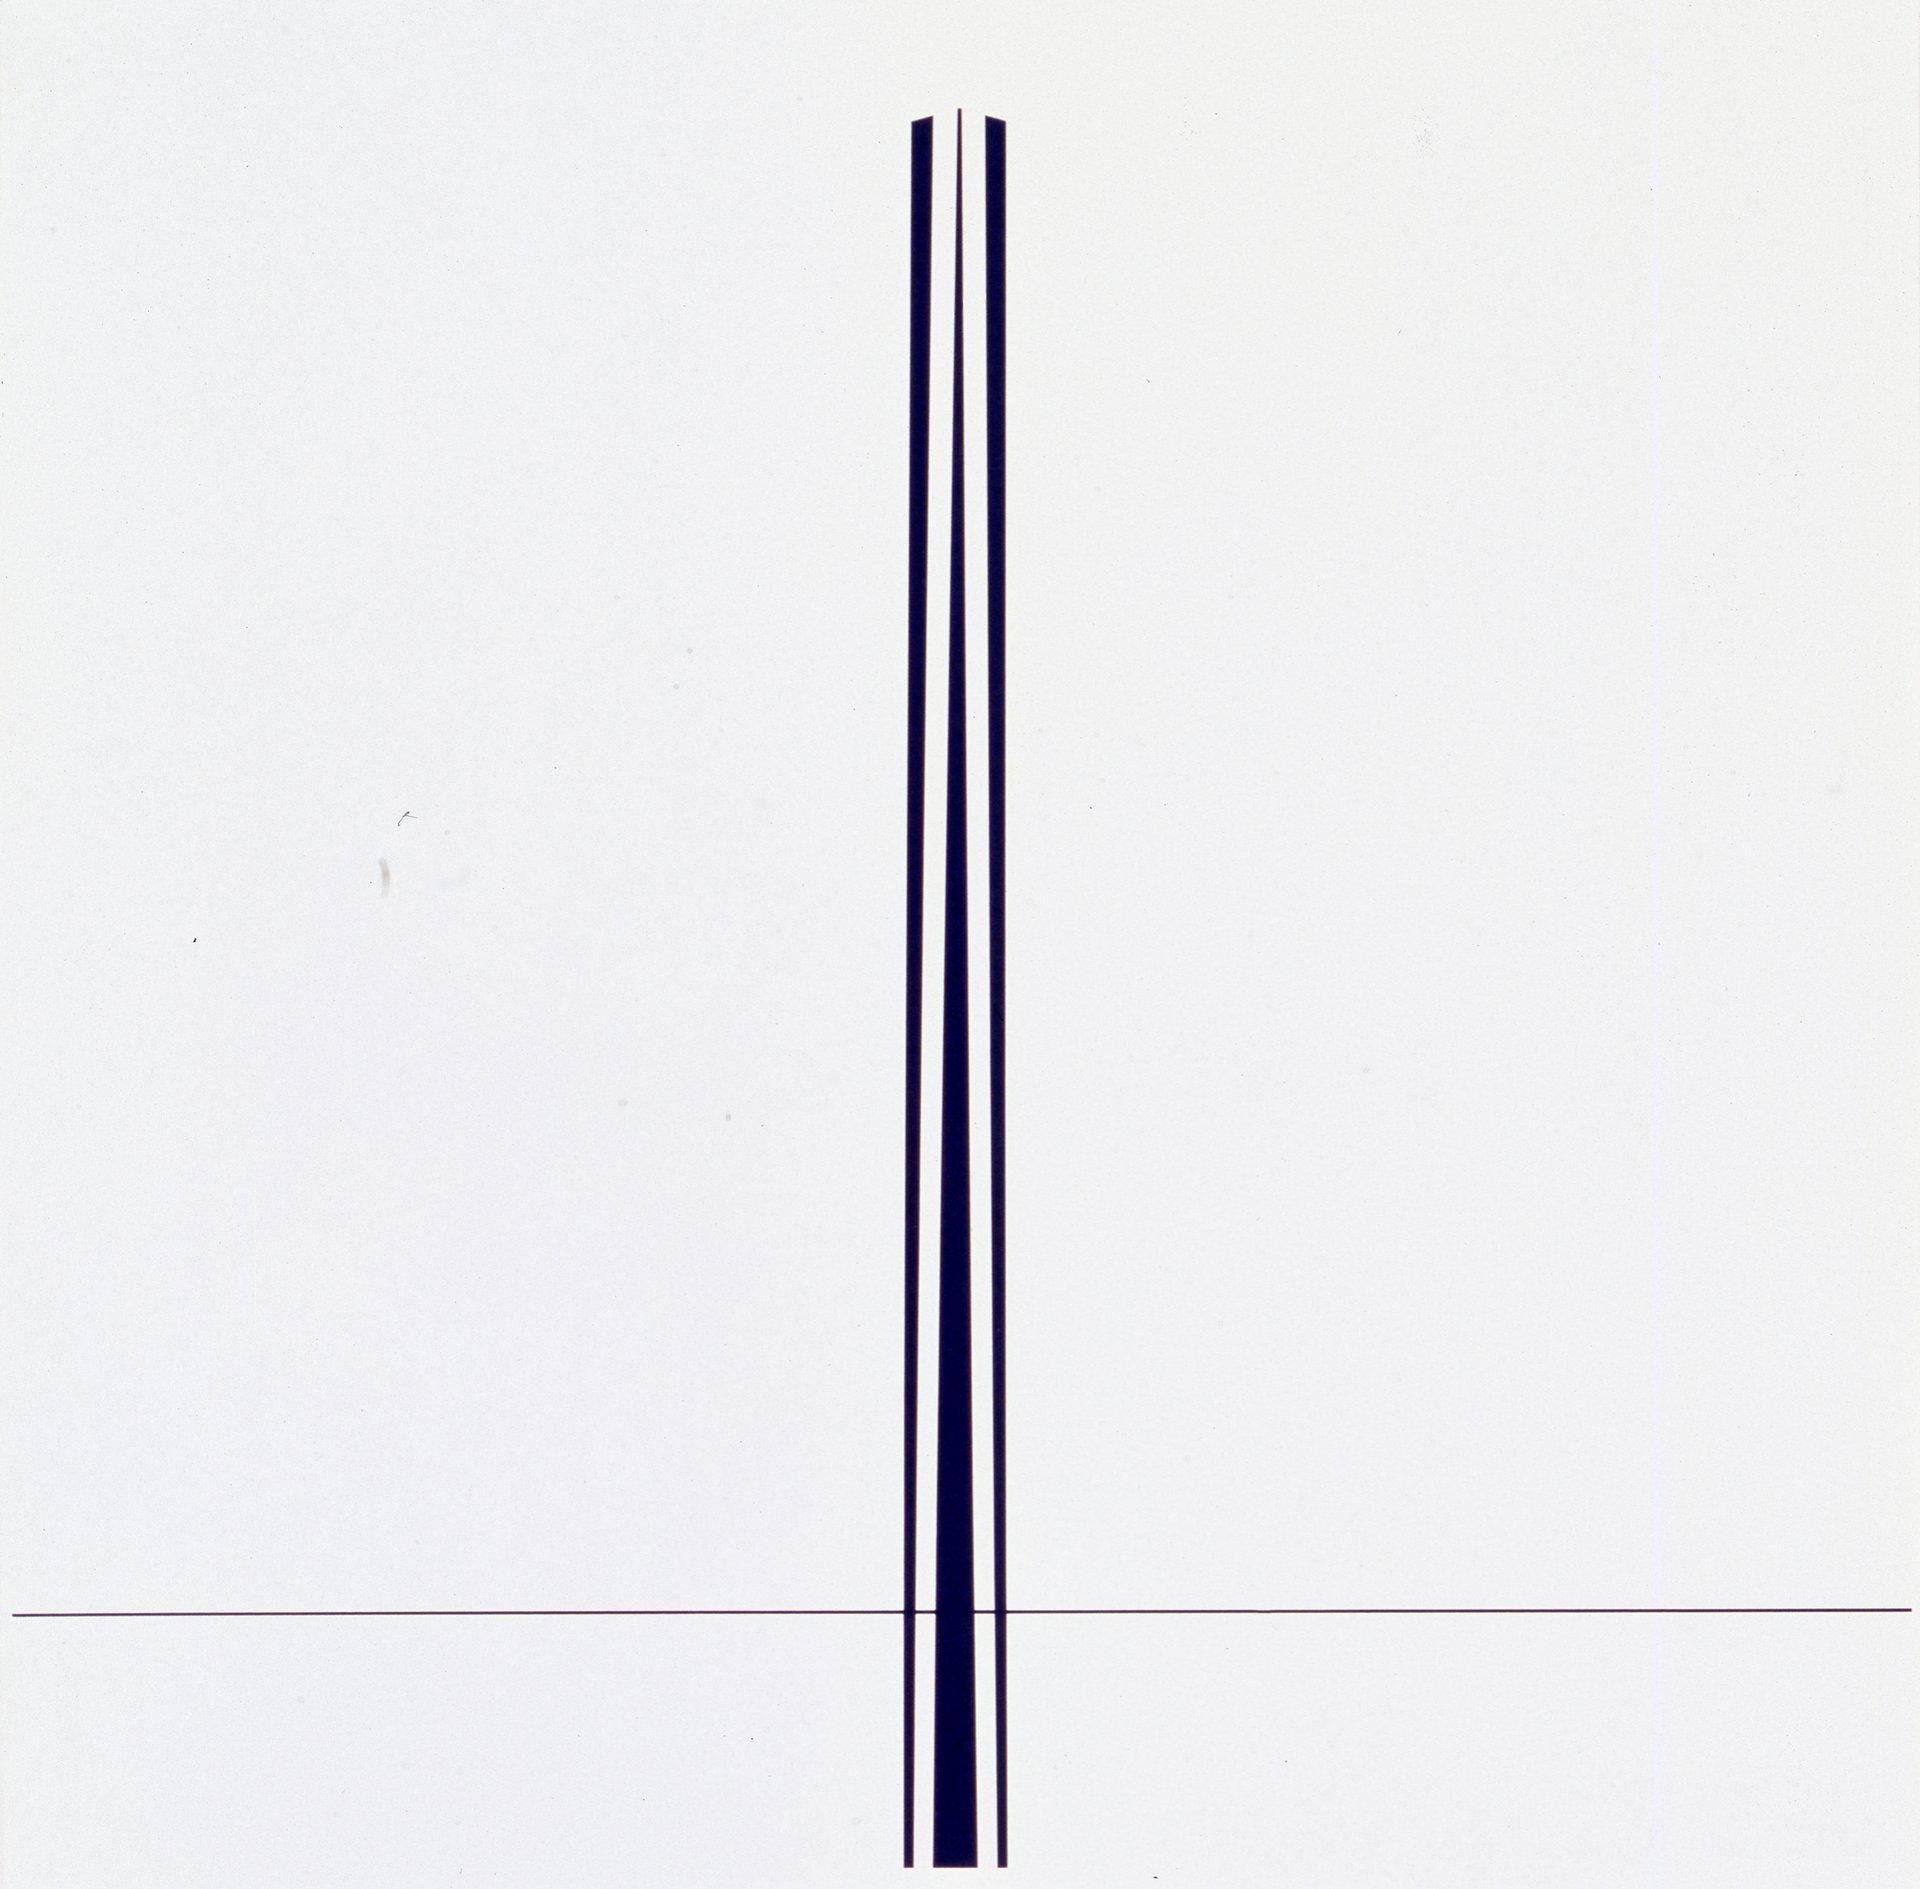 anatolij krivtschikov, &quot;toccata&quot; (1963), silkscreen on laid paper, 60 x 60 cm